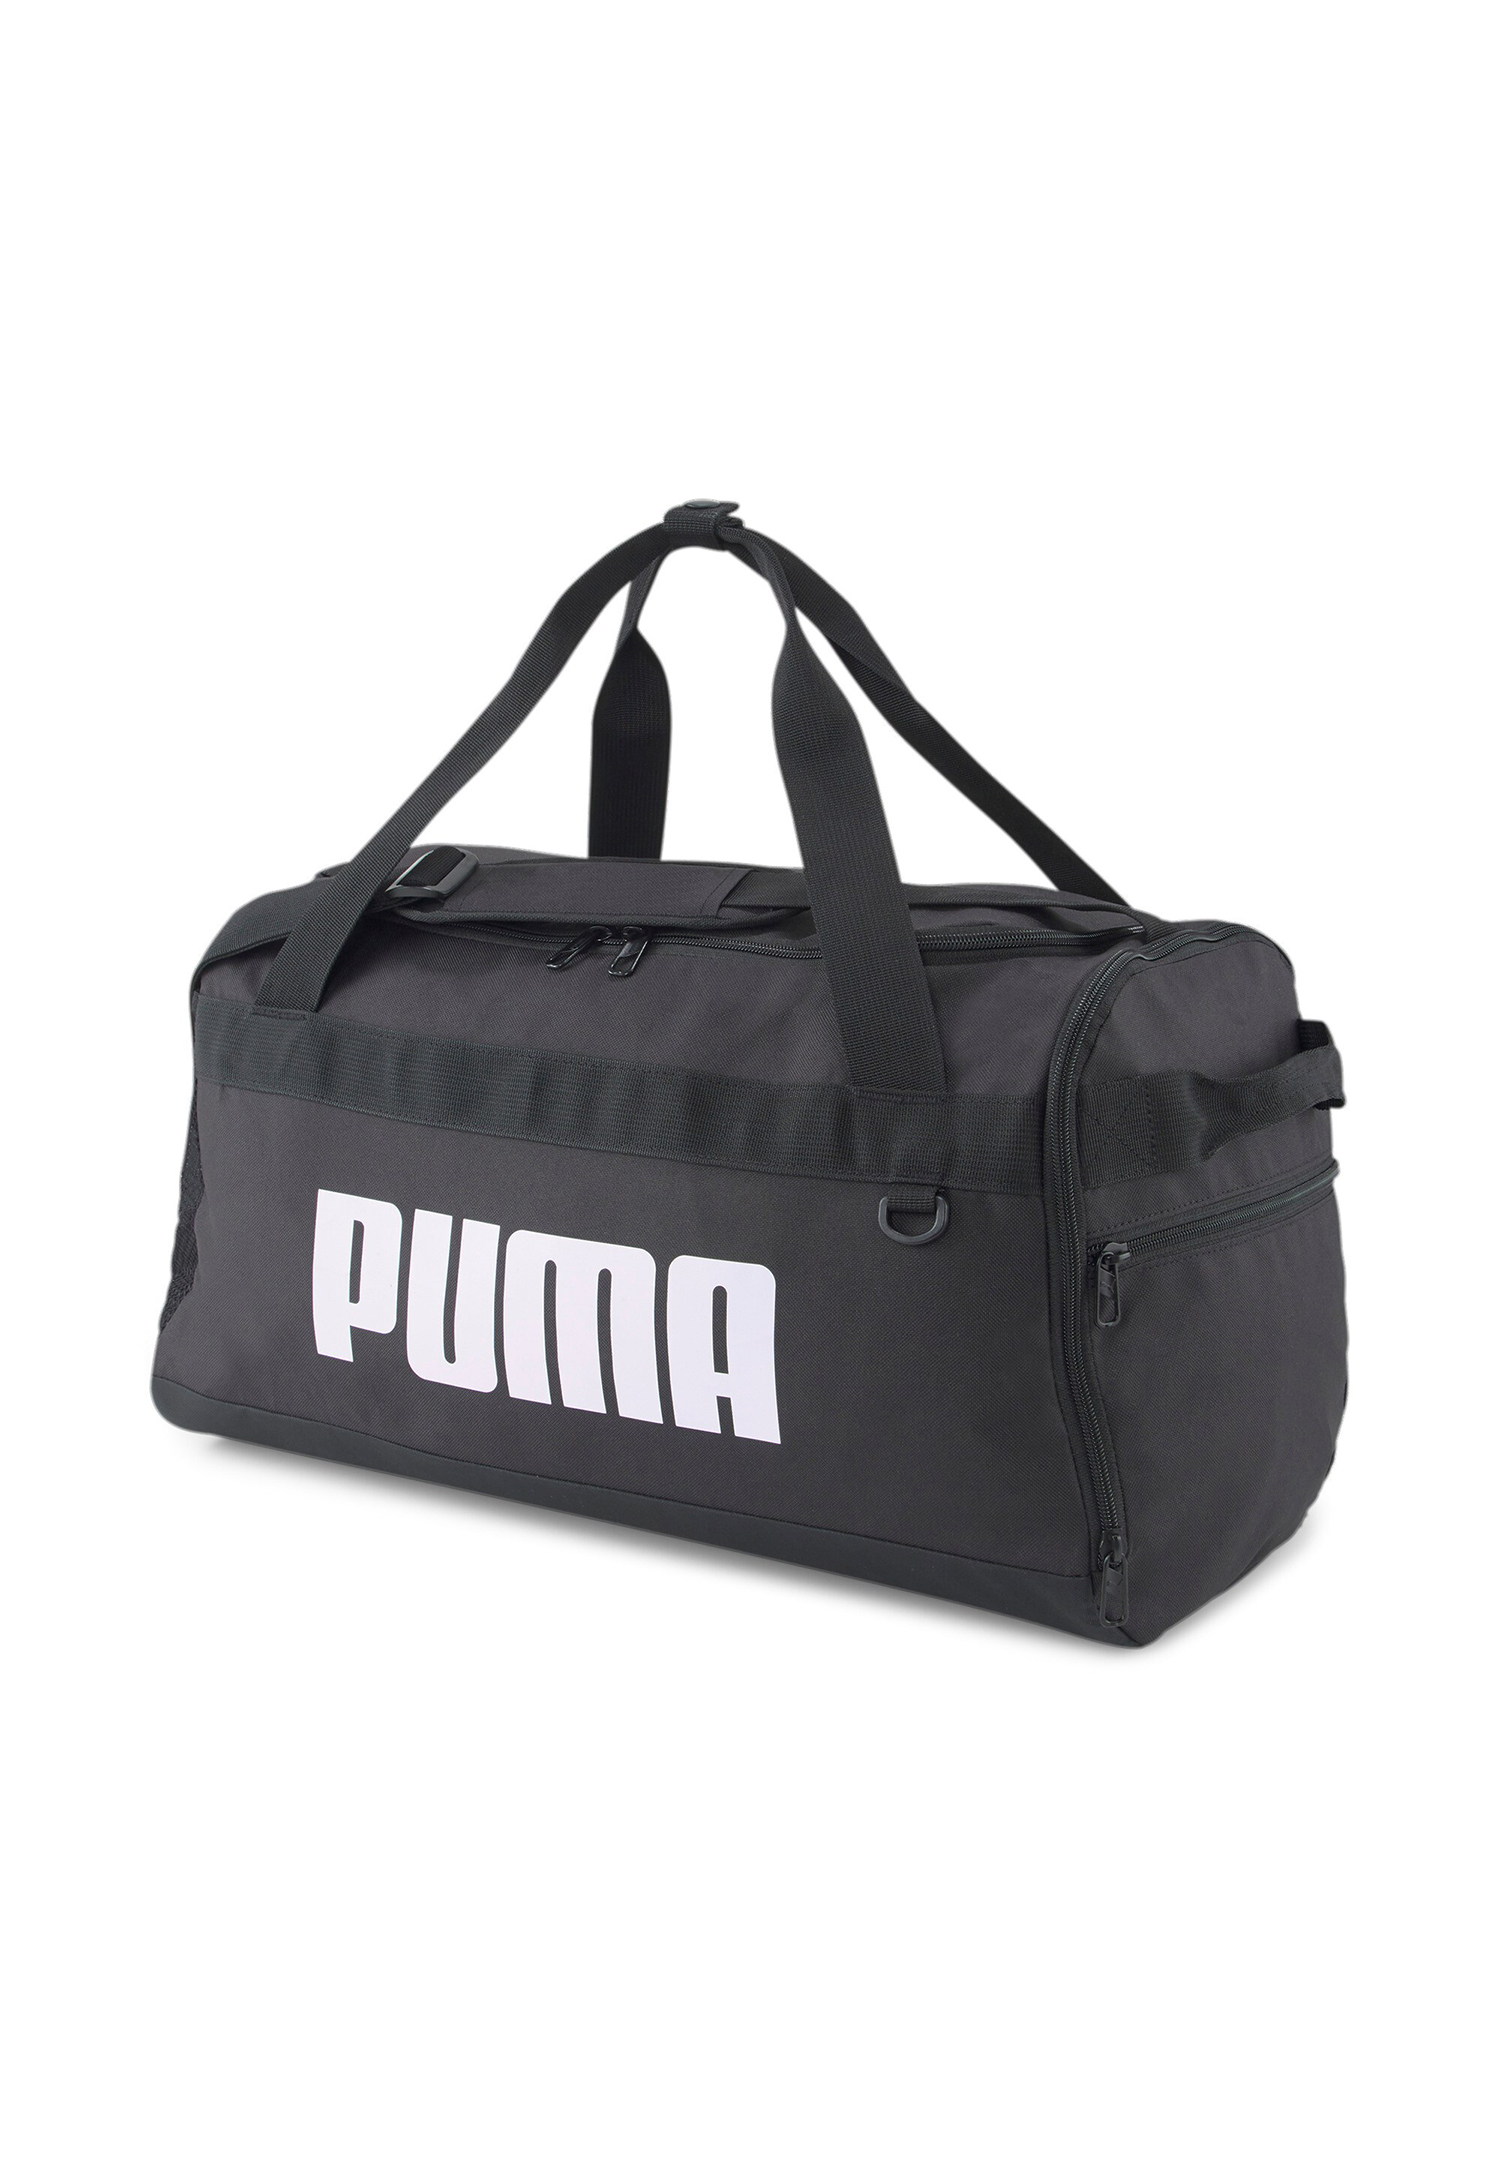 Puma Challenger Duffel Bag S 35L Sporttasche 79530 schwarz